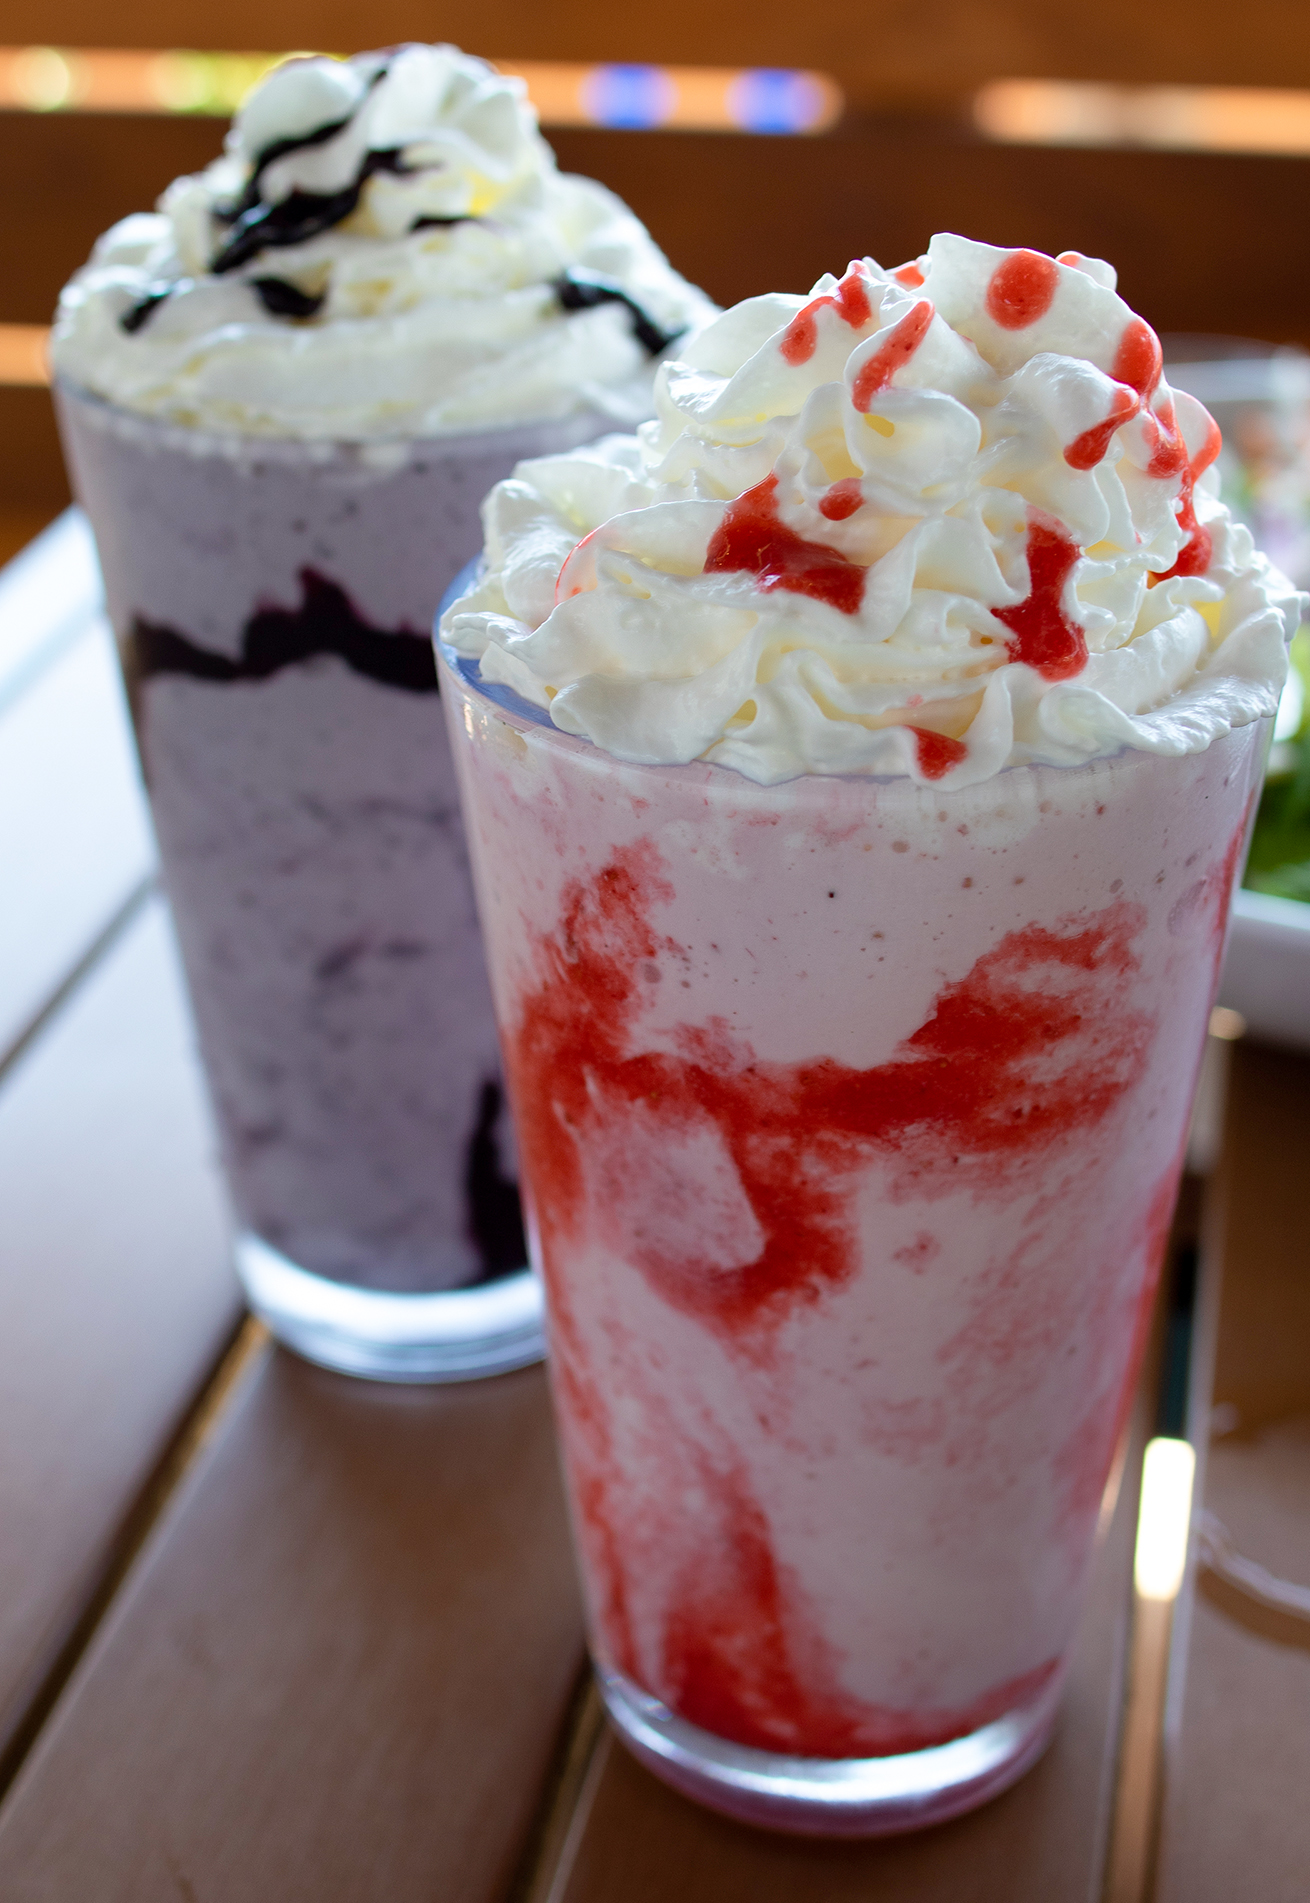 Strawberry and blueberry milkshakes at Delicious Dish in Sonoma (Heather Irwin/Sonoma Magazine)